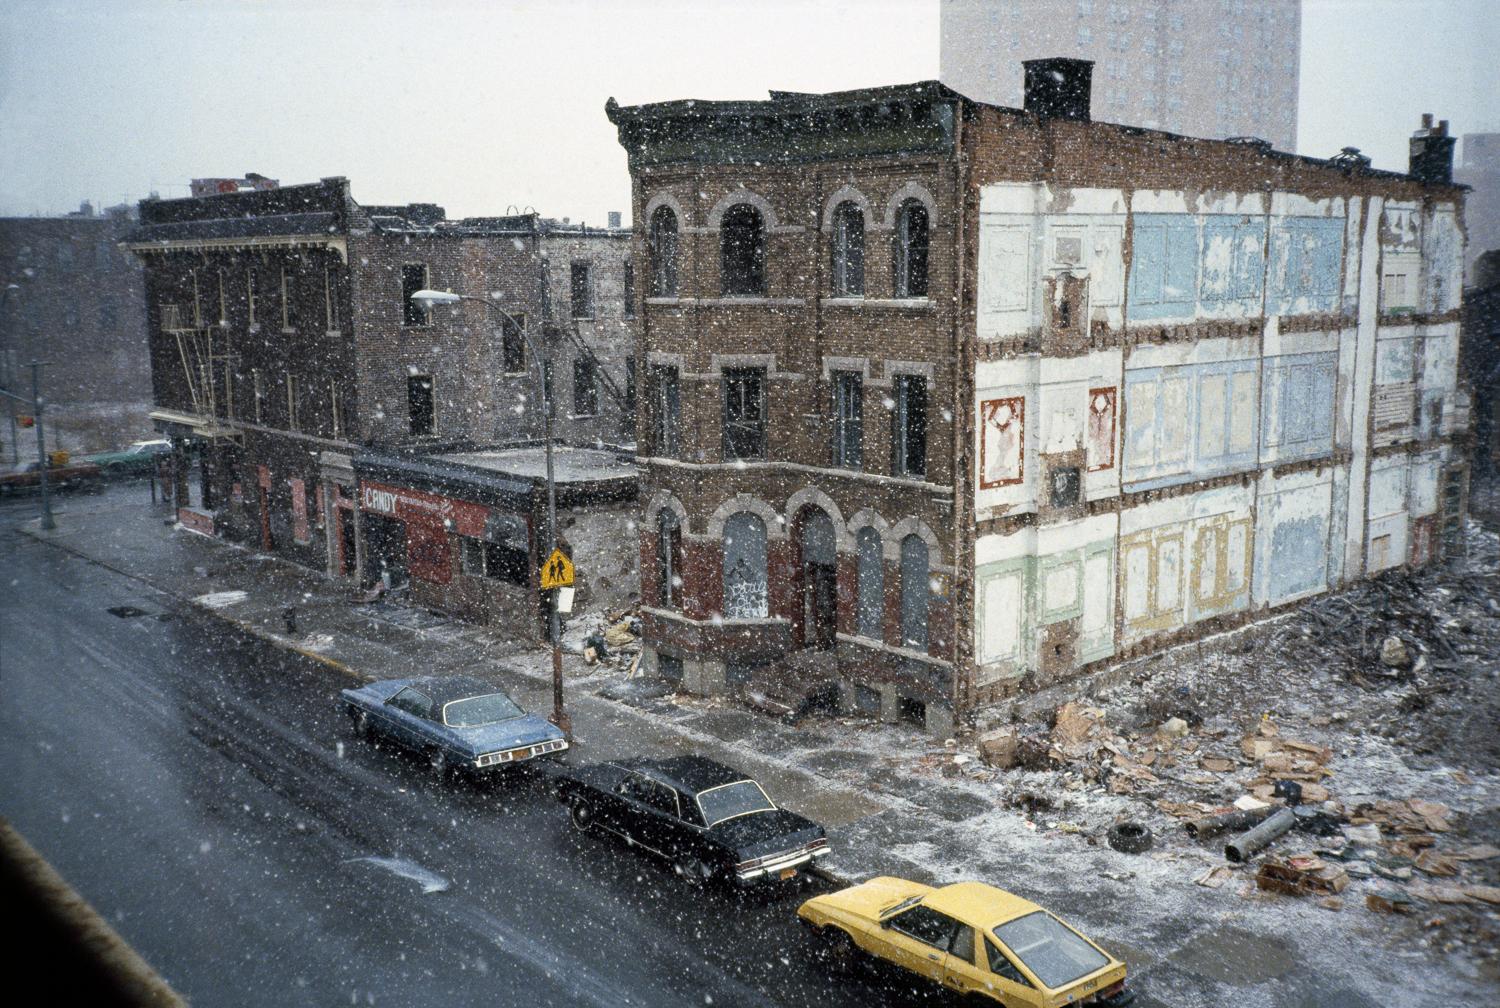 Spring Snowstorm Through Classroom Window Gates Avenue, Bushwick, Brooklyn, NY - Photograph by Meryl Meisler